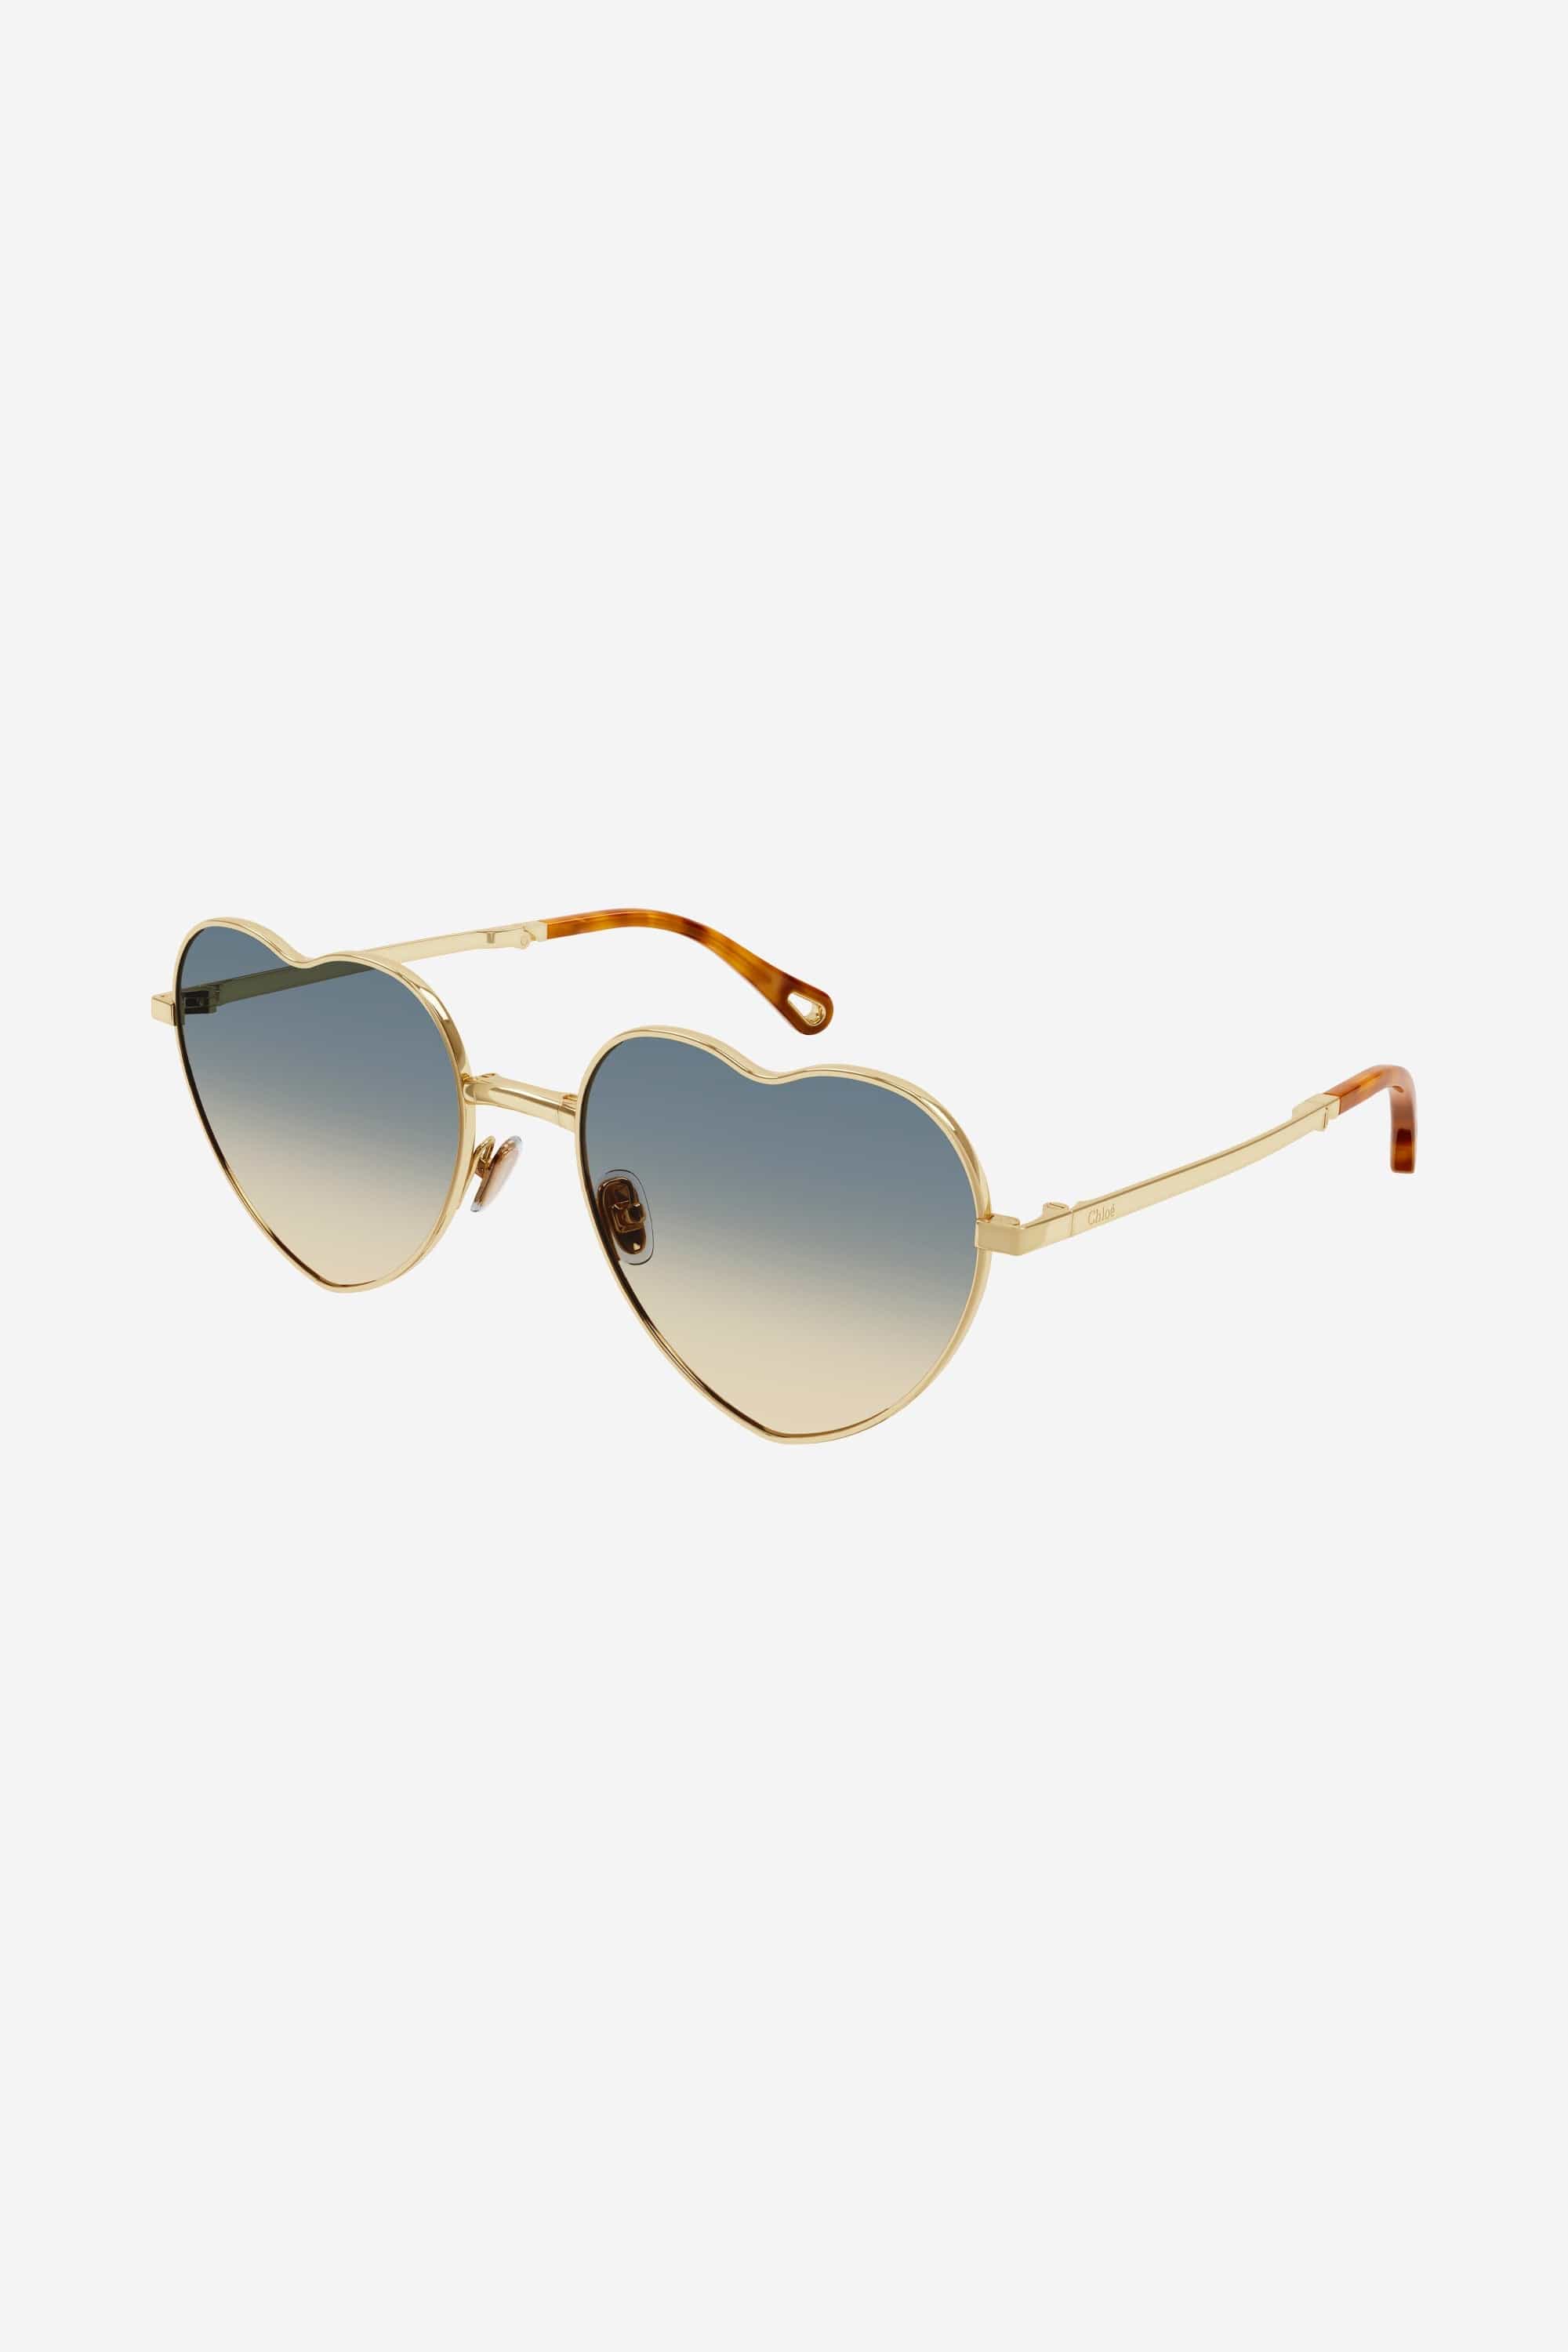 Iconic Chloé heart shape metal foldable shades - Eyewear Club